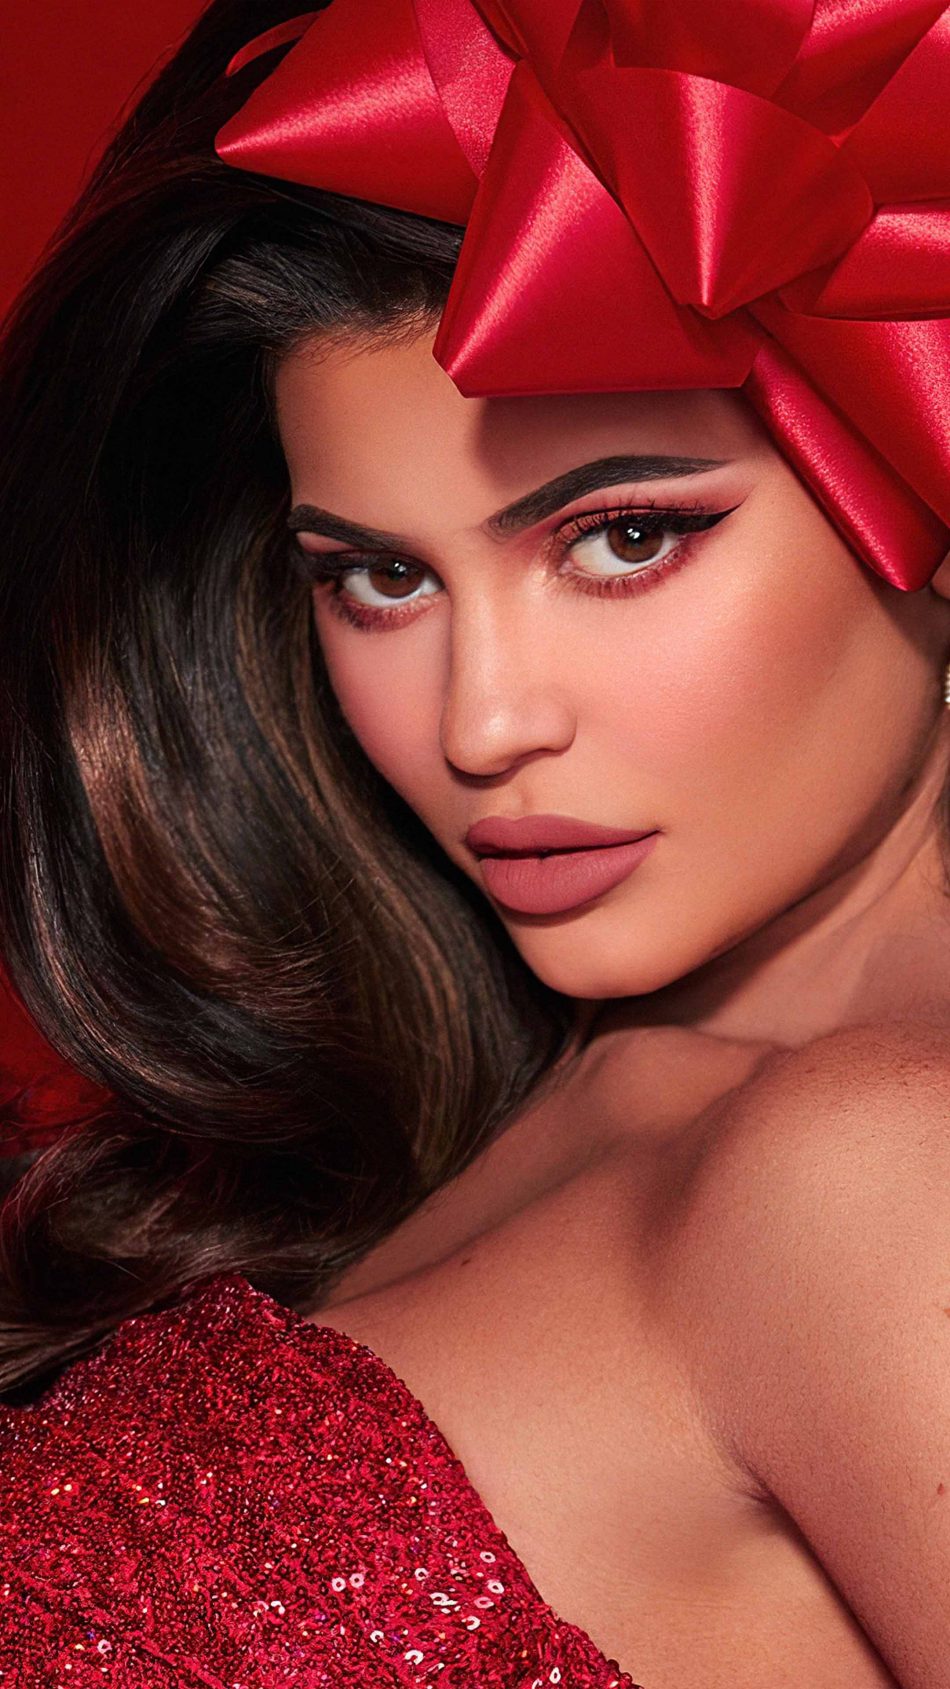 Kylie Jenner In Red Dress 4K Ultra HD Mobile Wallpaper